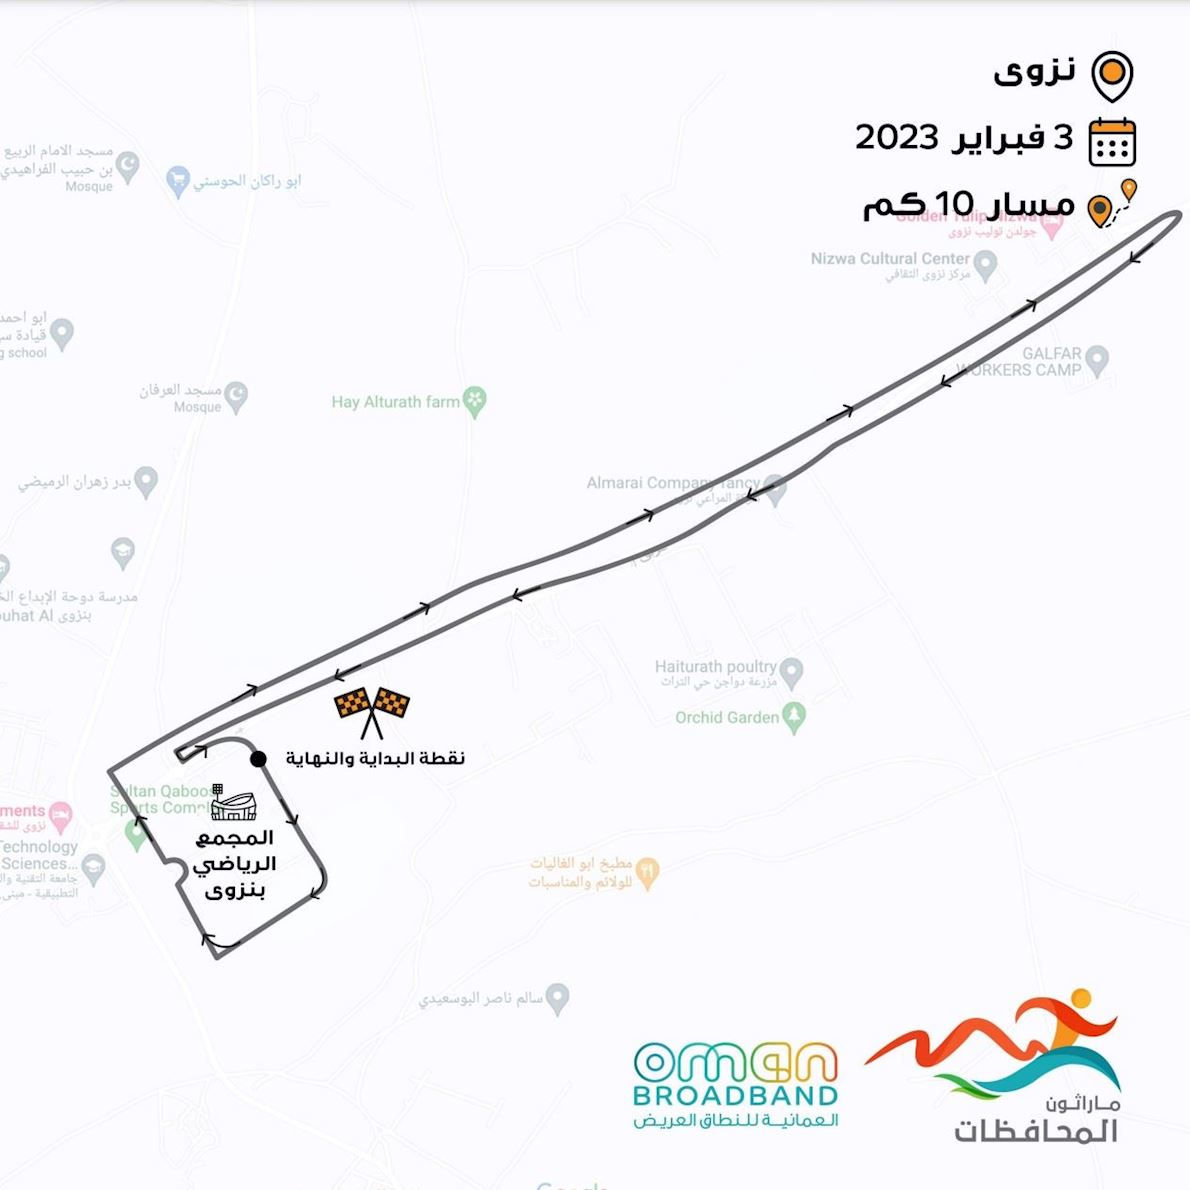 Oman Broadband Governorates Marathon 路线图